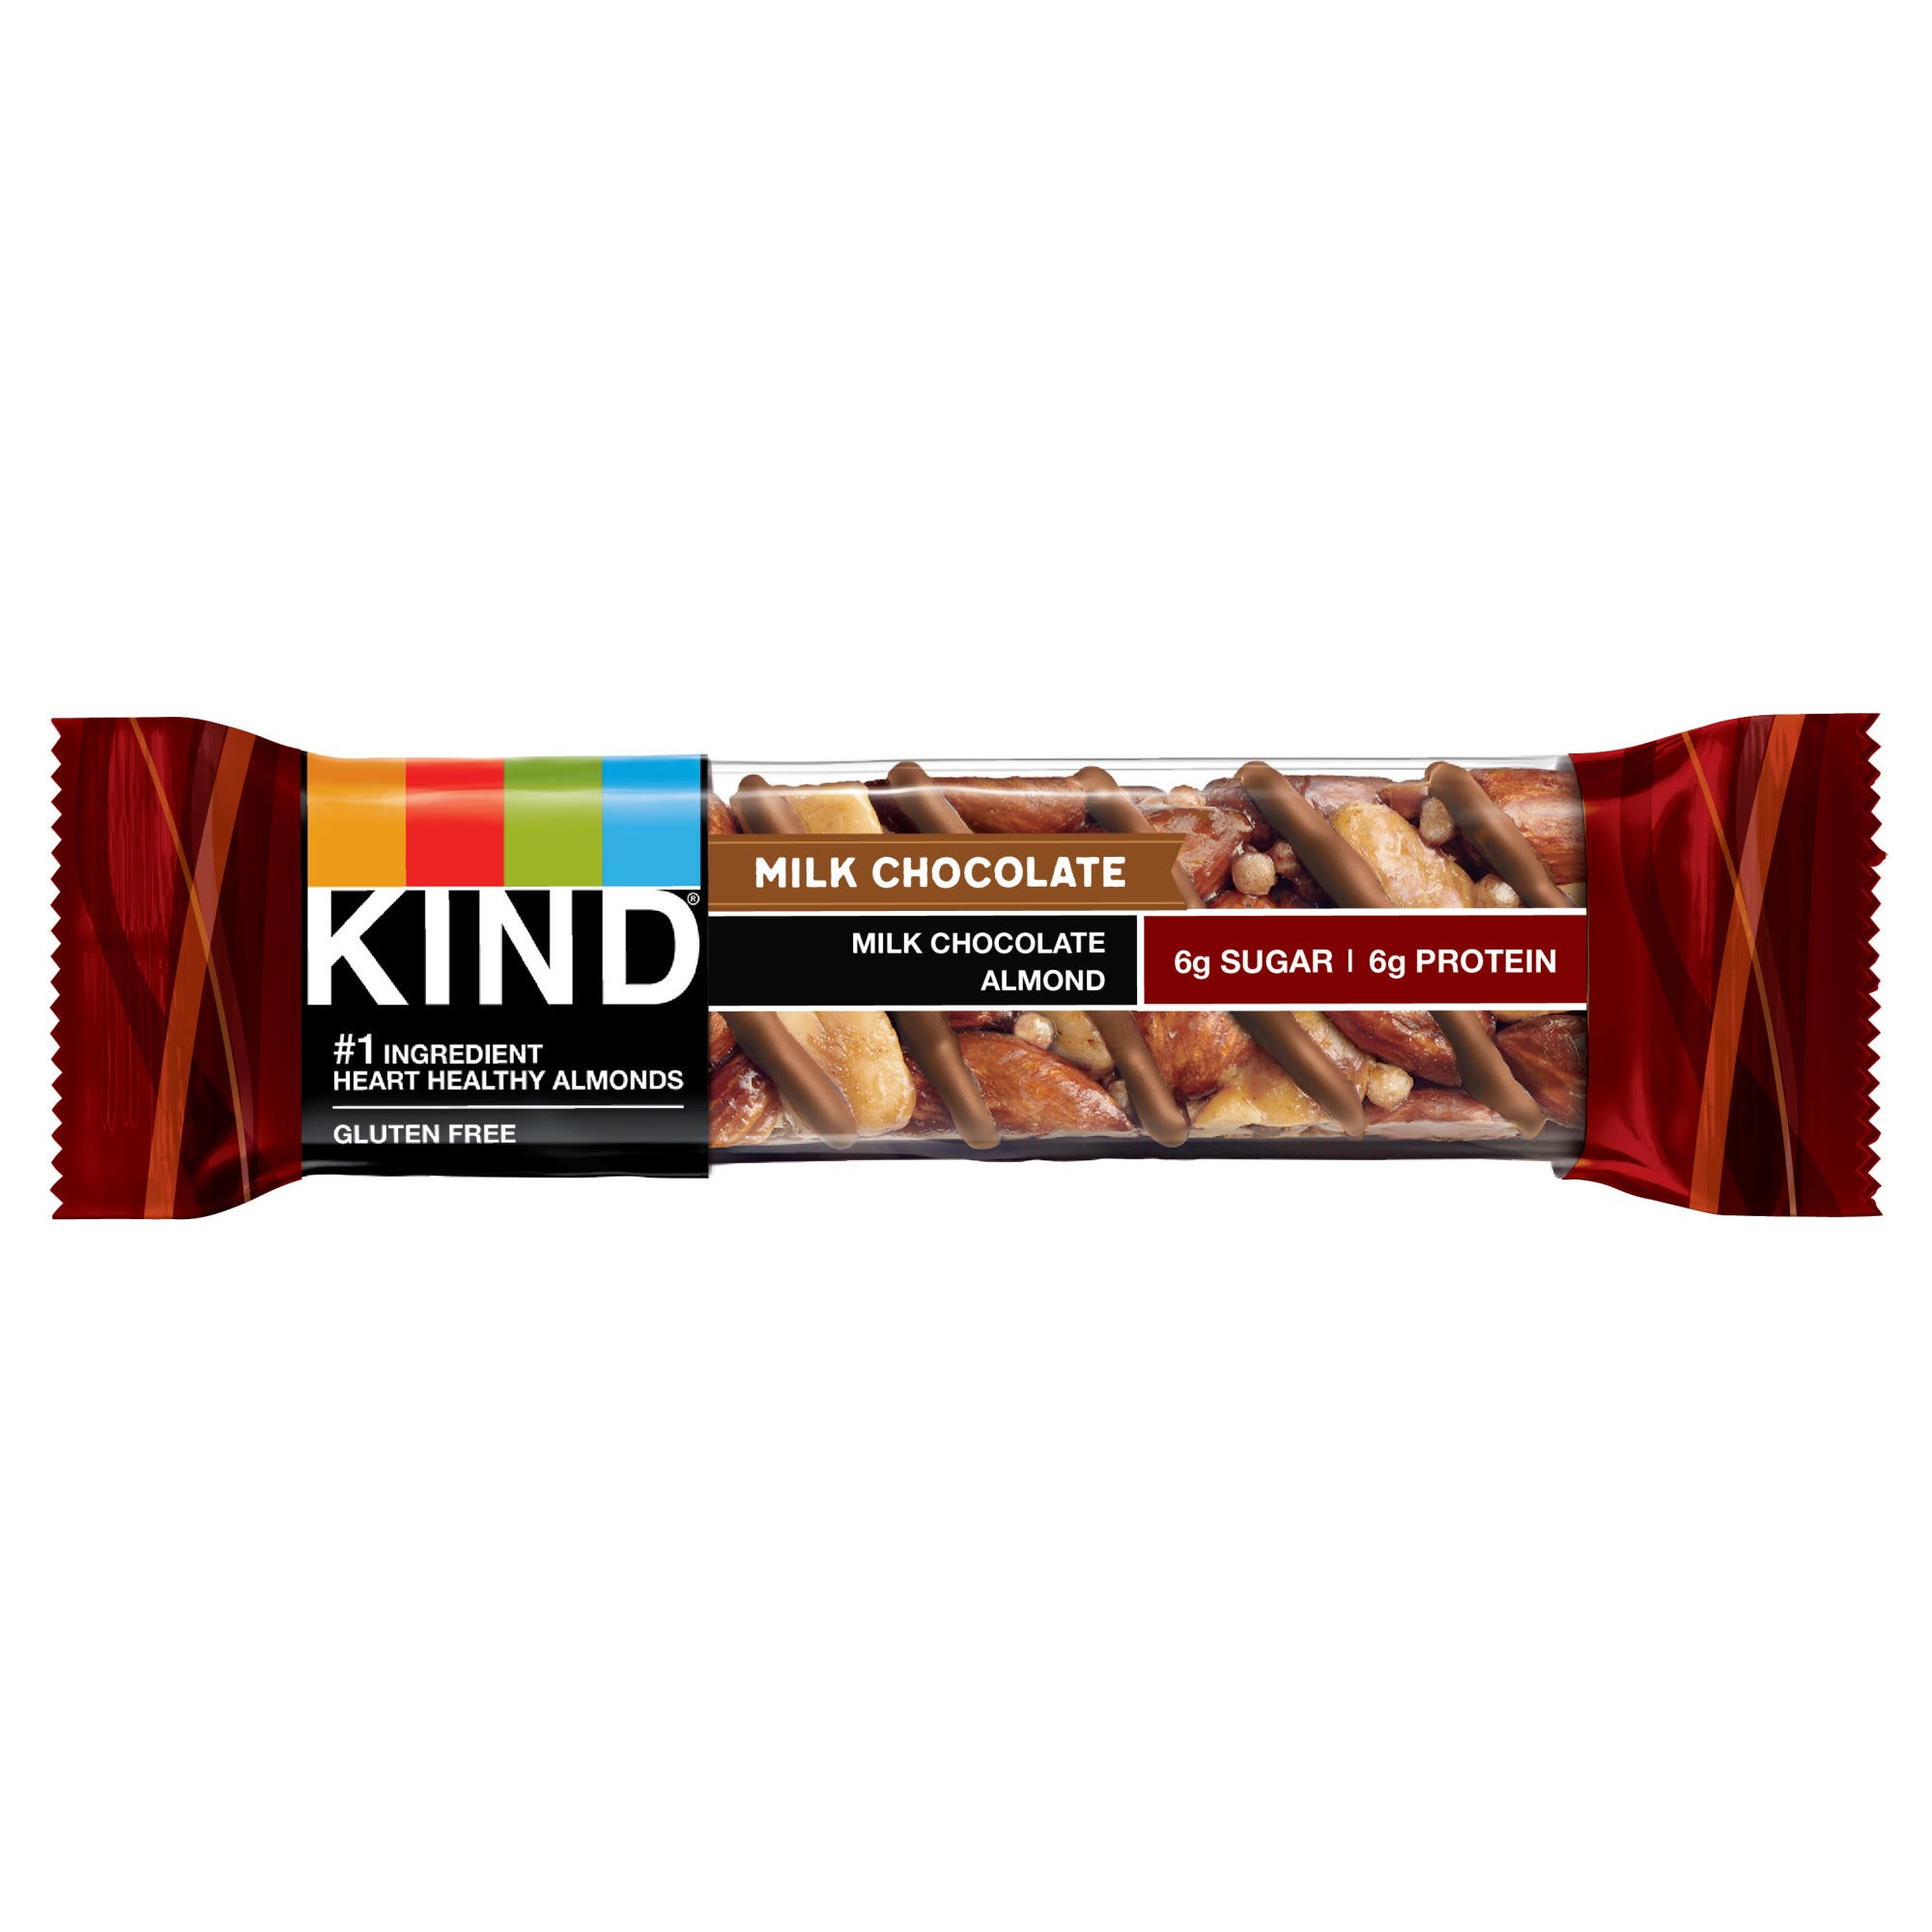 KIND Core Chocolate Series, Milk Chocolate Almond, 1.4 oz - 1 bar